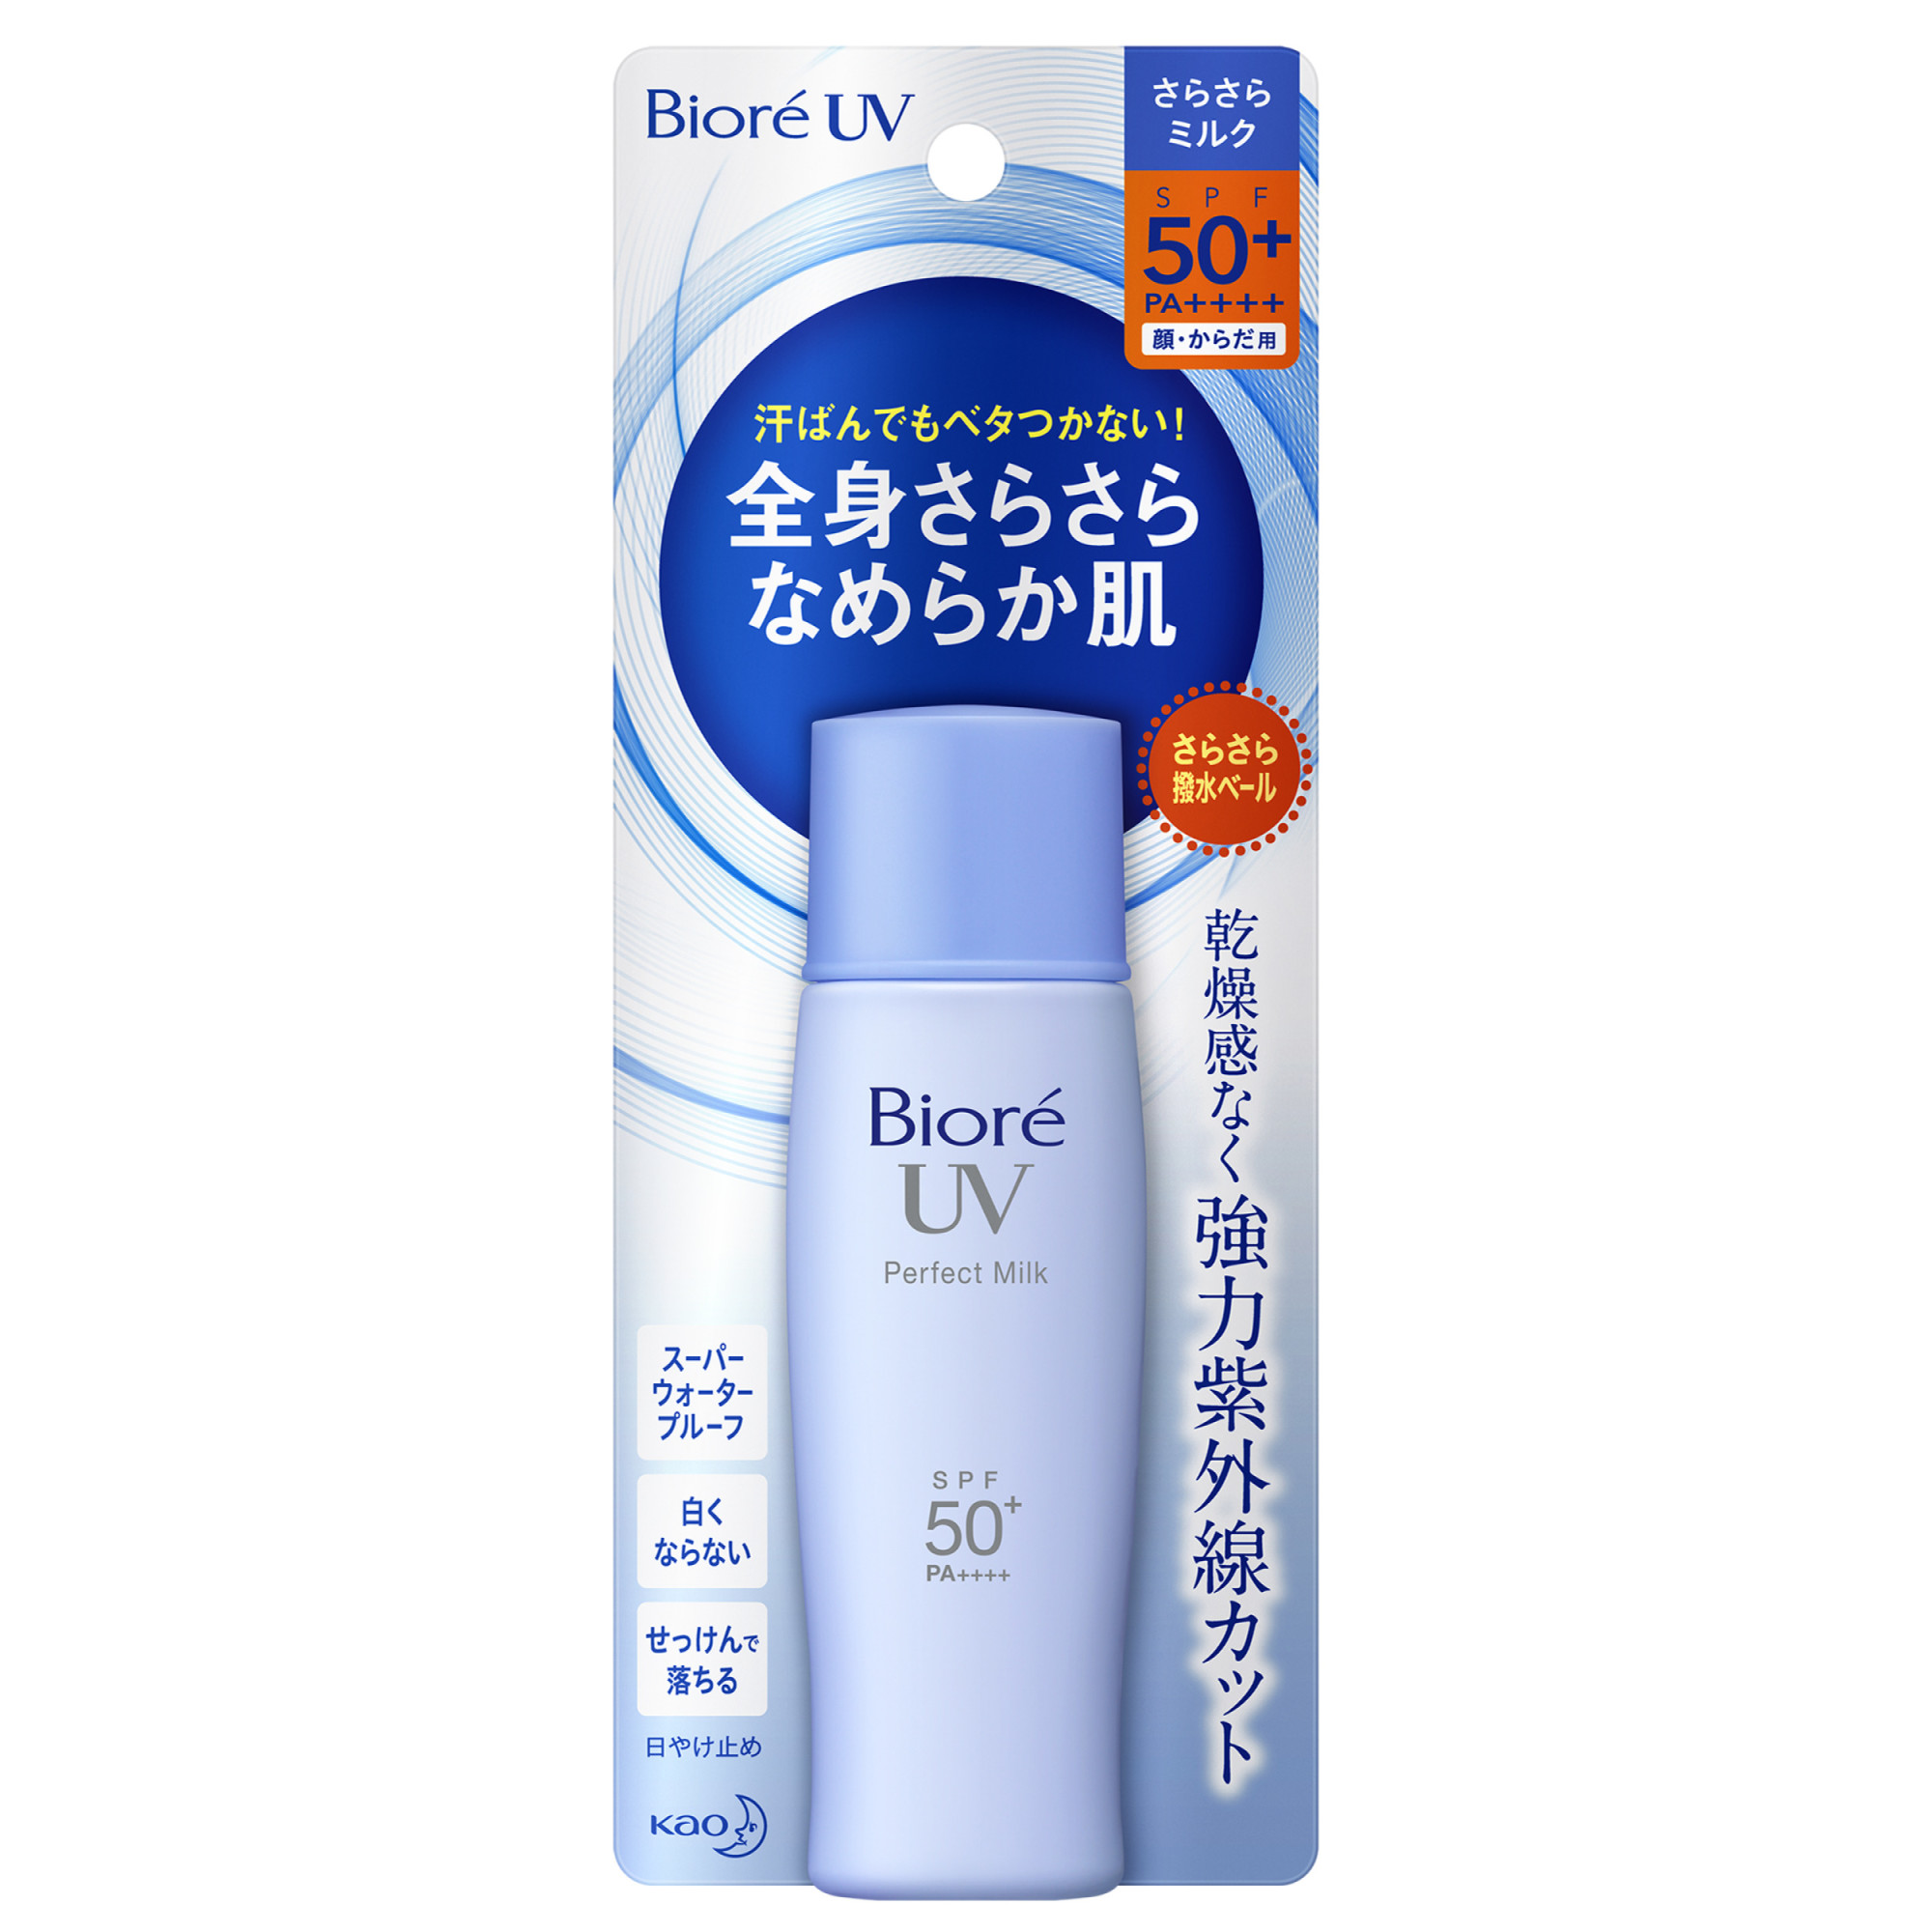 Biore UV Солнцезащитная эмульсия для лица "Гладкость кожи" SPF50+, 40 гр